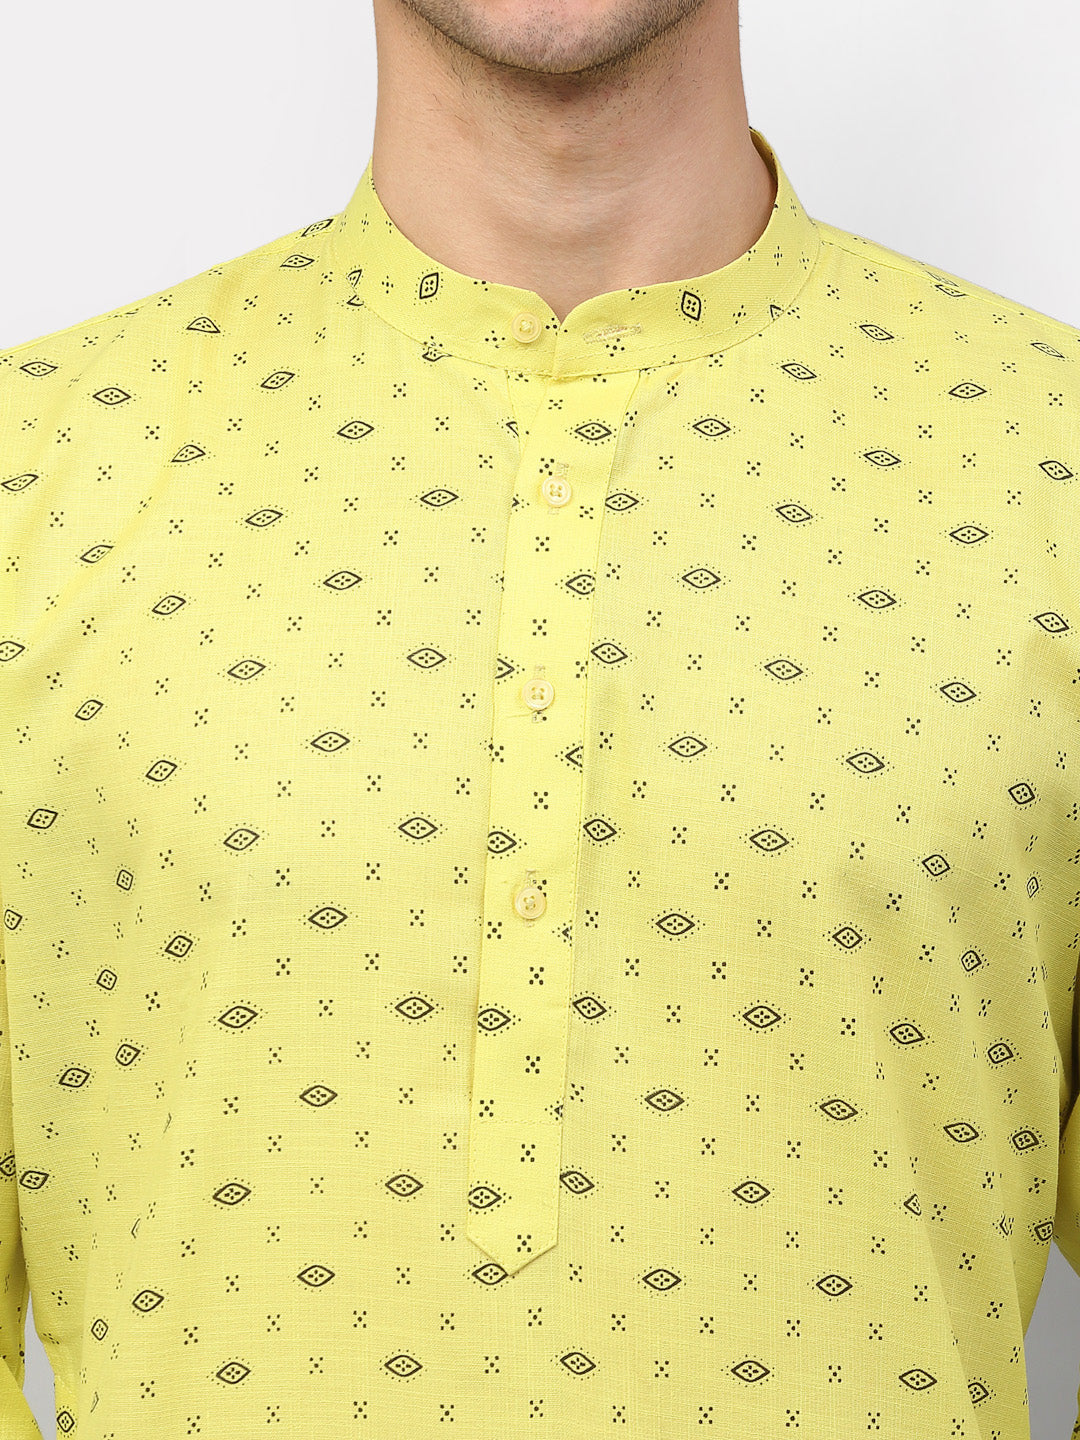 Men's Lemon Printed Cotton Kurta Only ( KO 614 Lemon ) - Virat Fashions